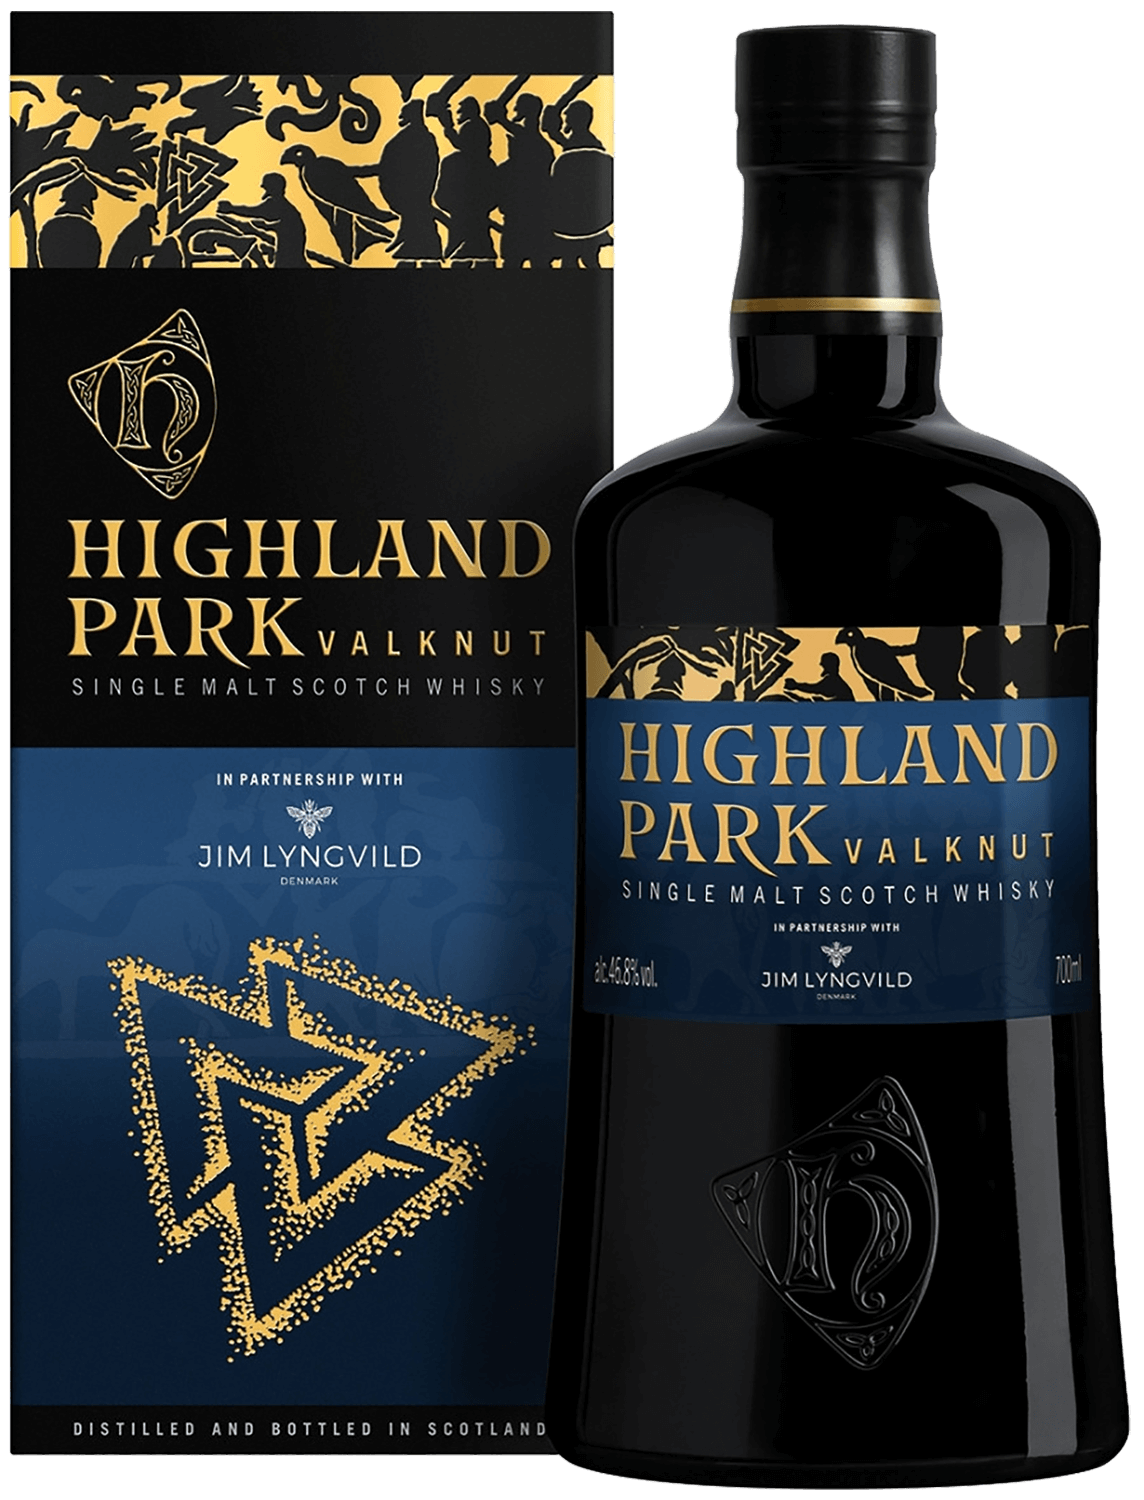 highland queen majesty single malt scotch whisky 16 y o gift box Highland Park Valknut Single Malt Scotch Whisky (gift box)